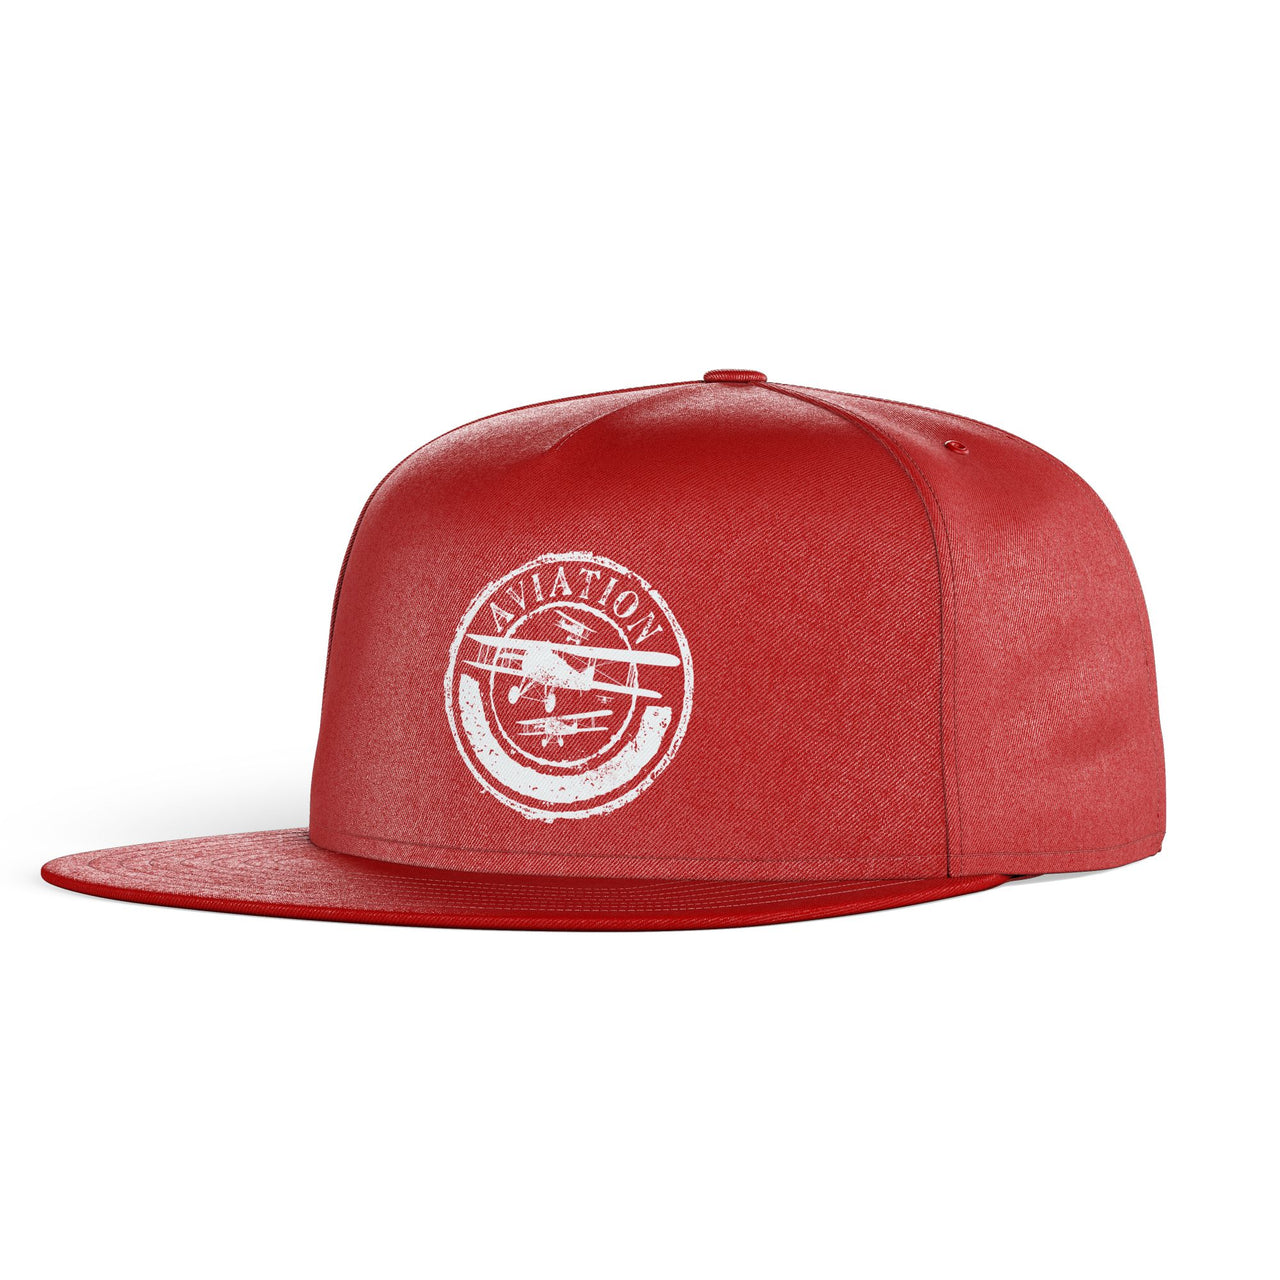 Aviation Lovers Designed Snapback Caps & Hats